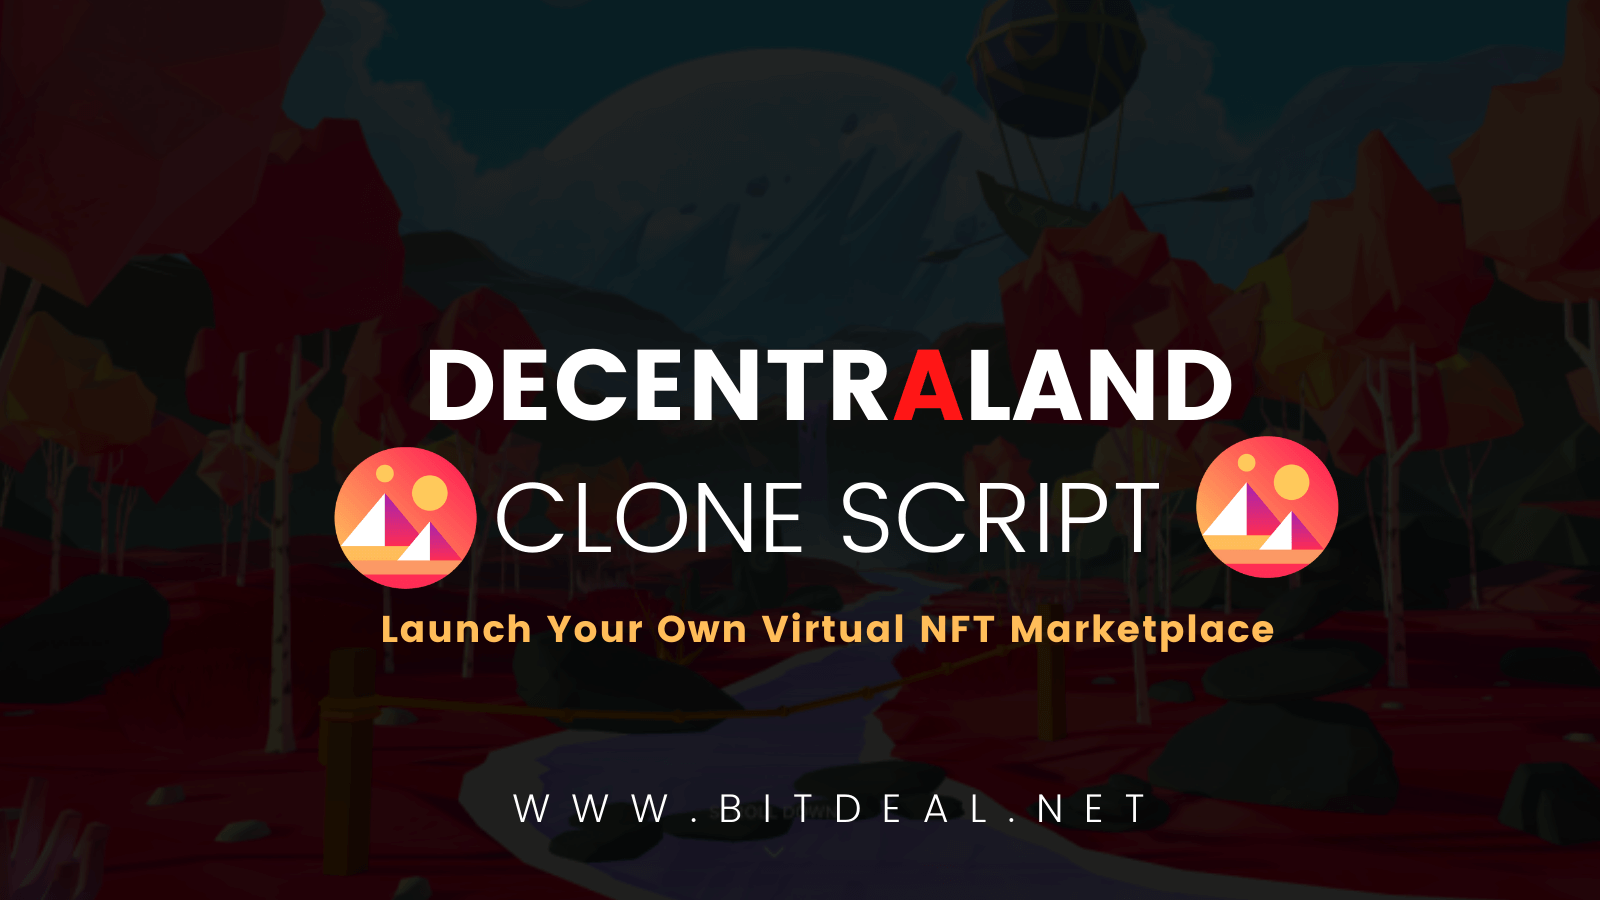 Decentraland Clone Script To Build an NFT Virtual Platform like Decentraland